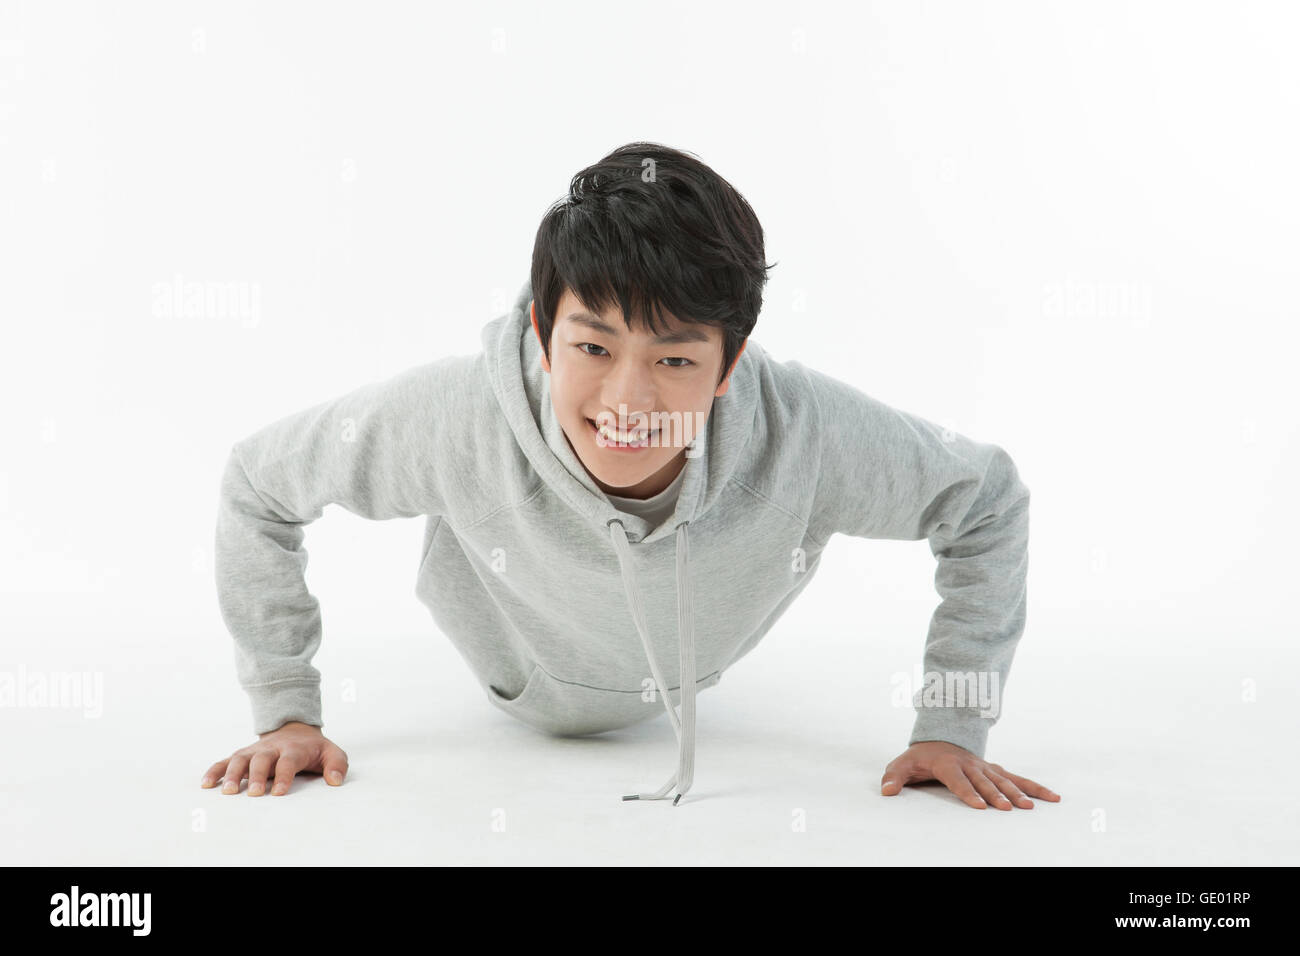 Smiling teenager boy doing pushups Stock Photo